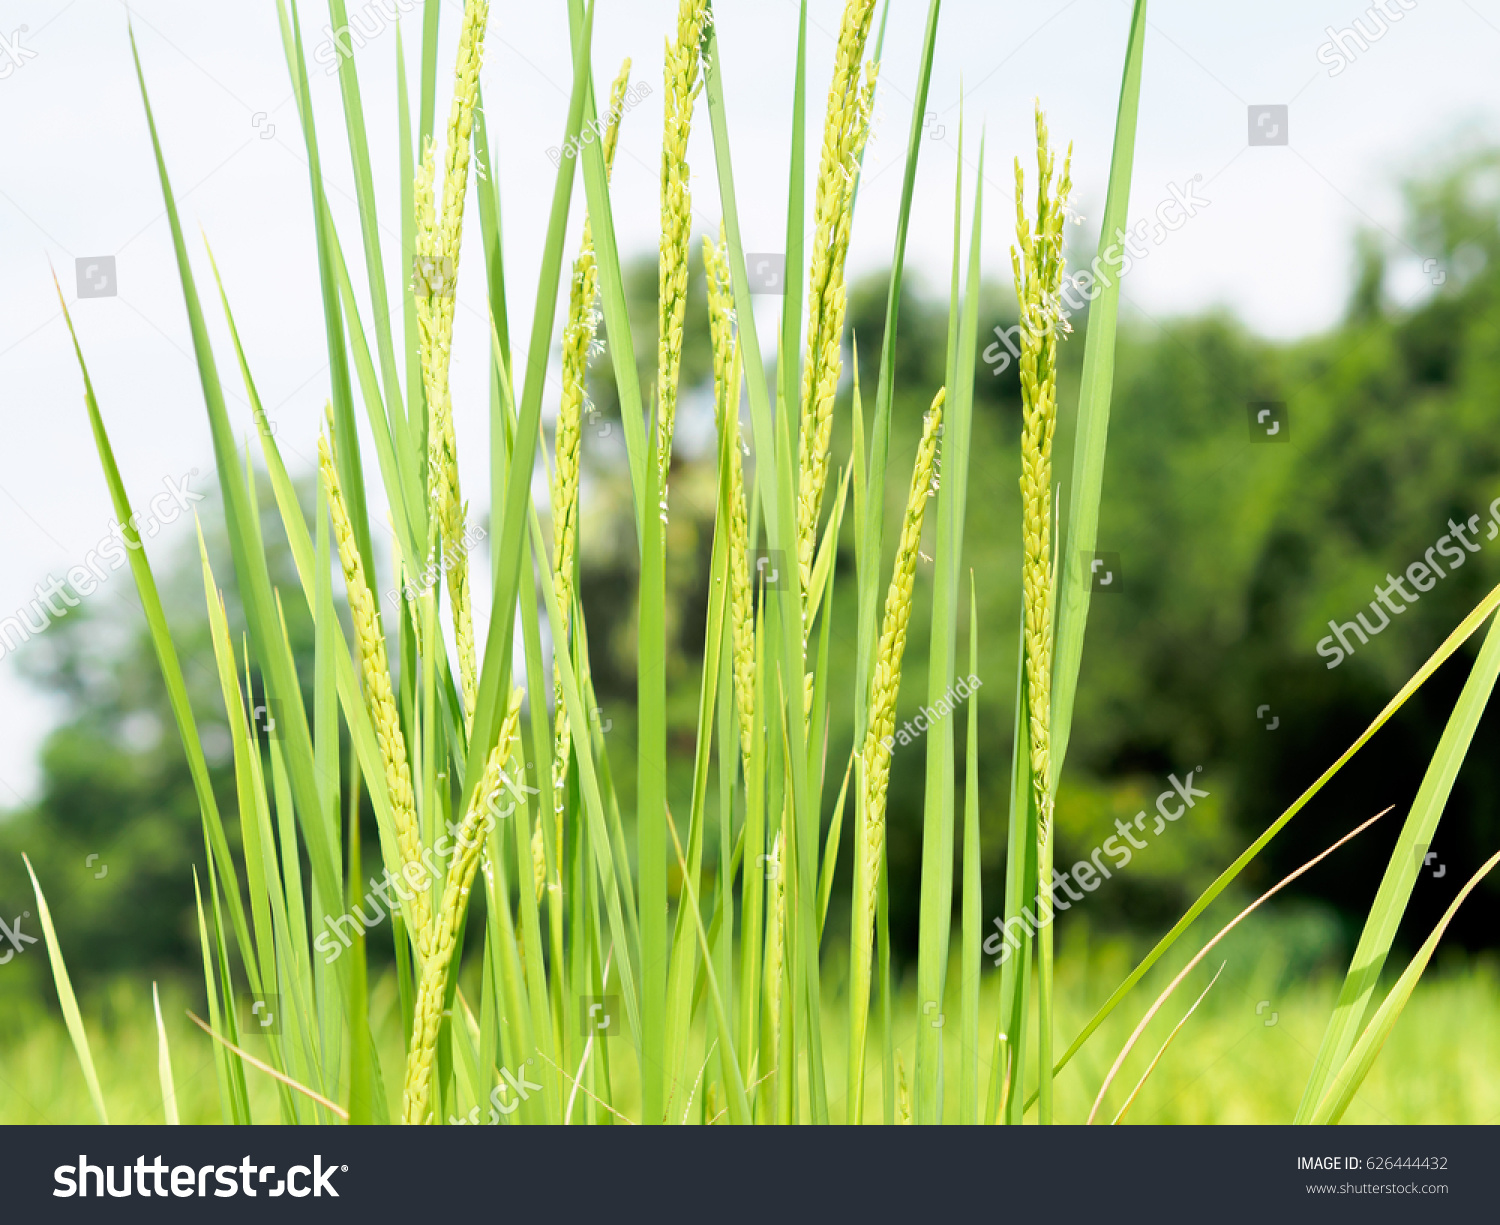 Green rice plants in paddy field #626444432